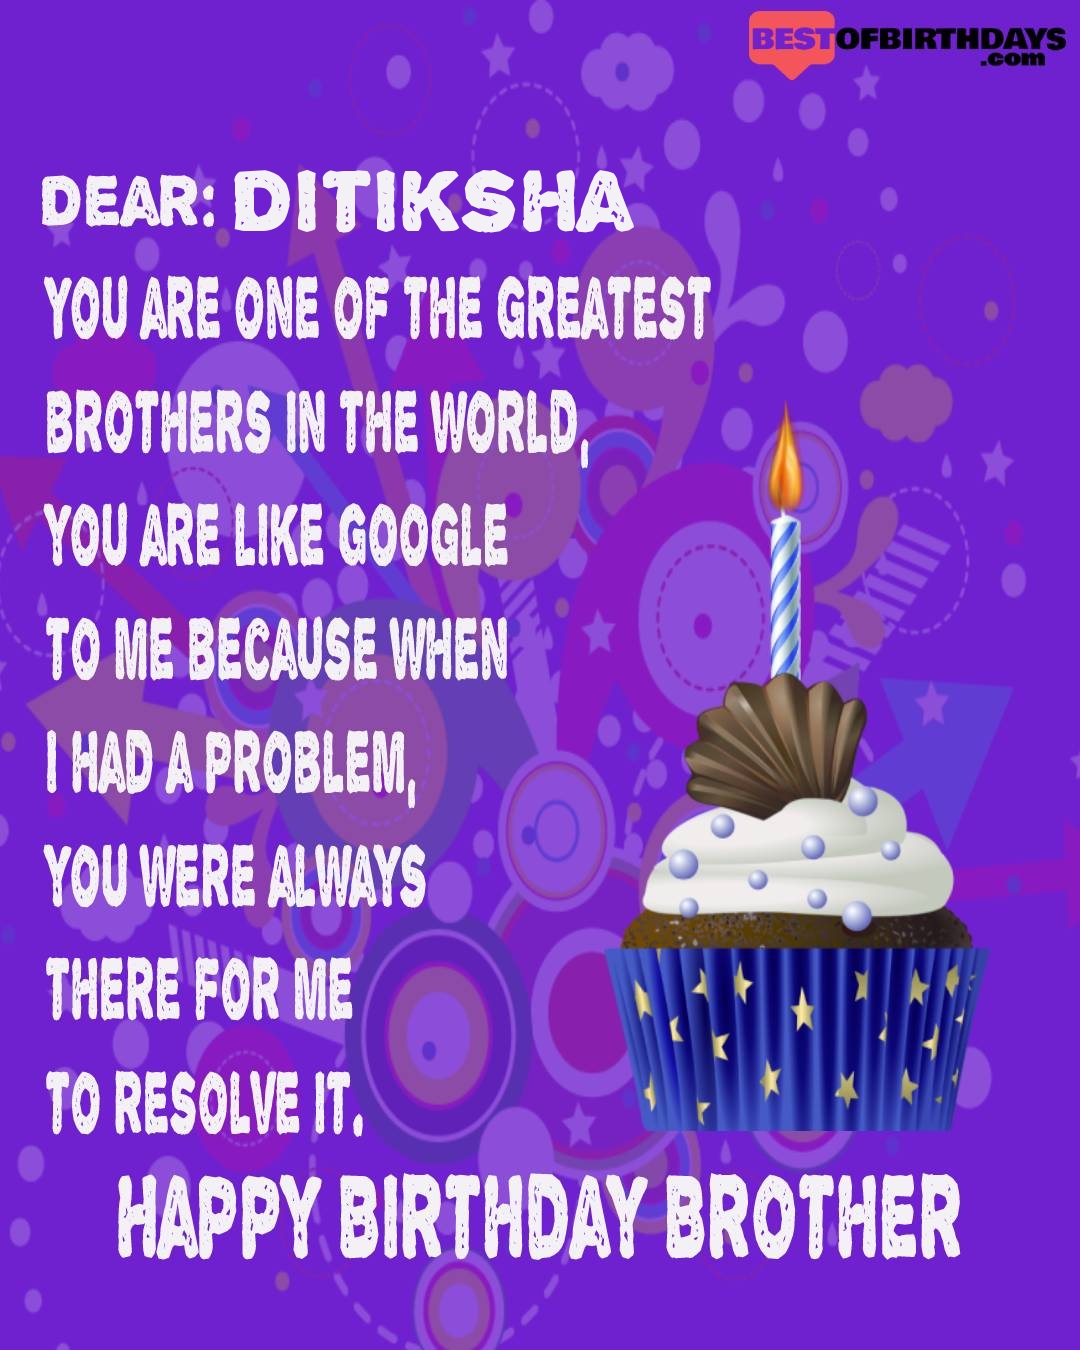 Happy birthday ditiksha bhai brother bro